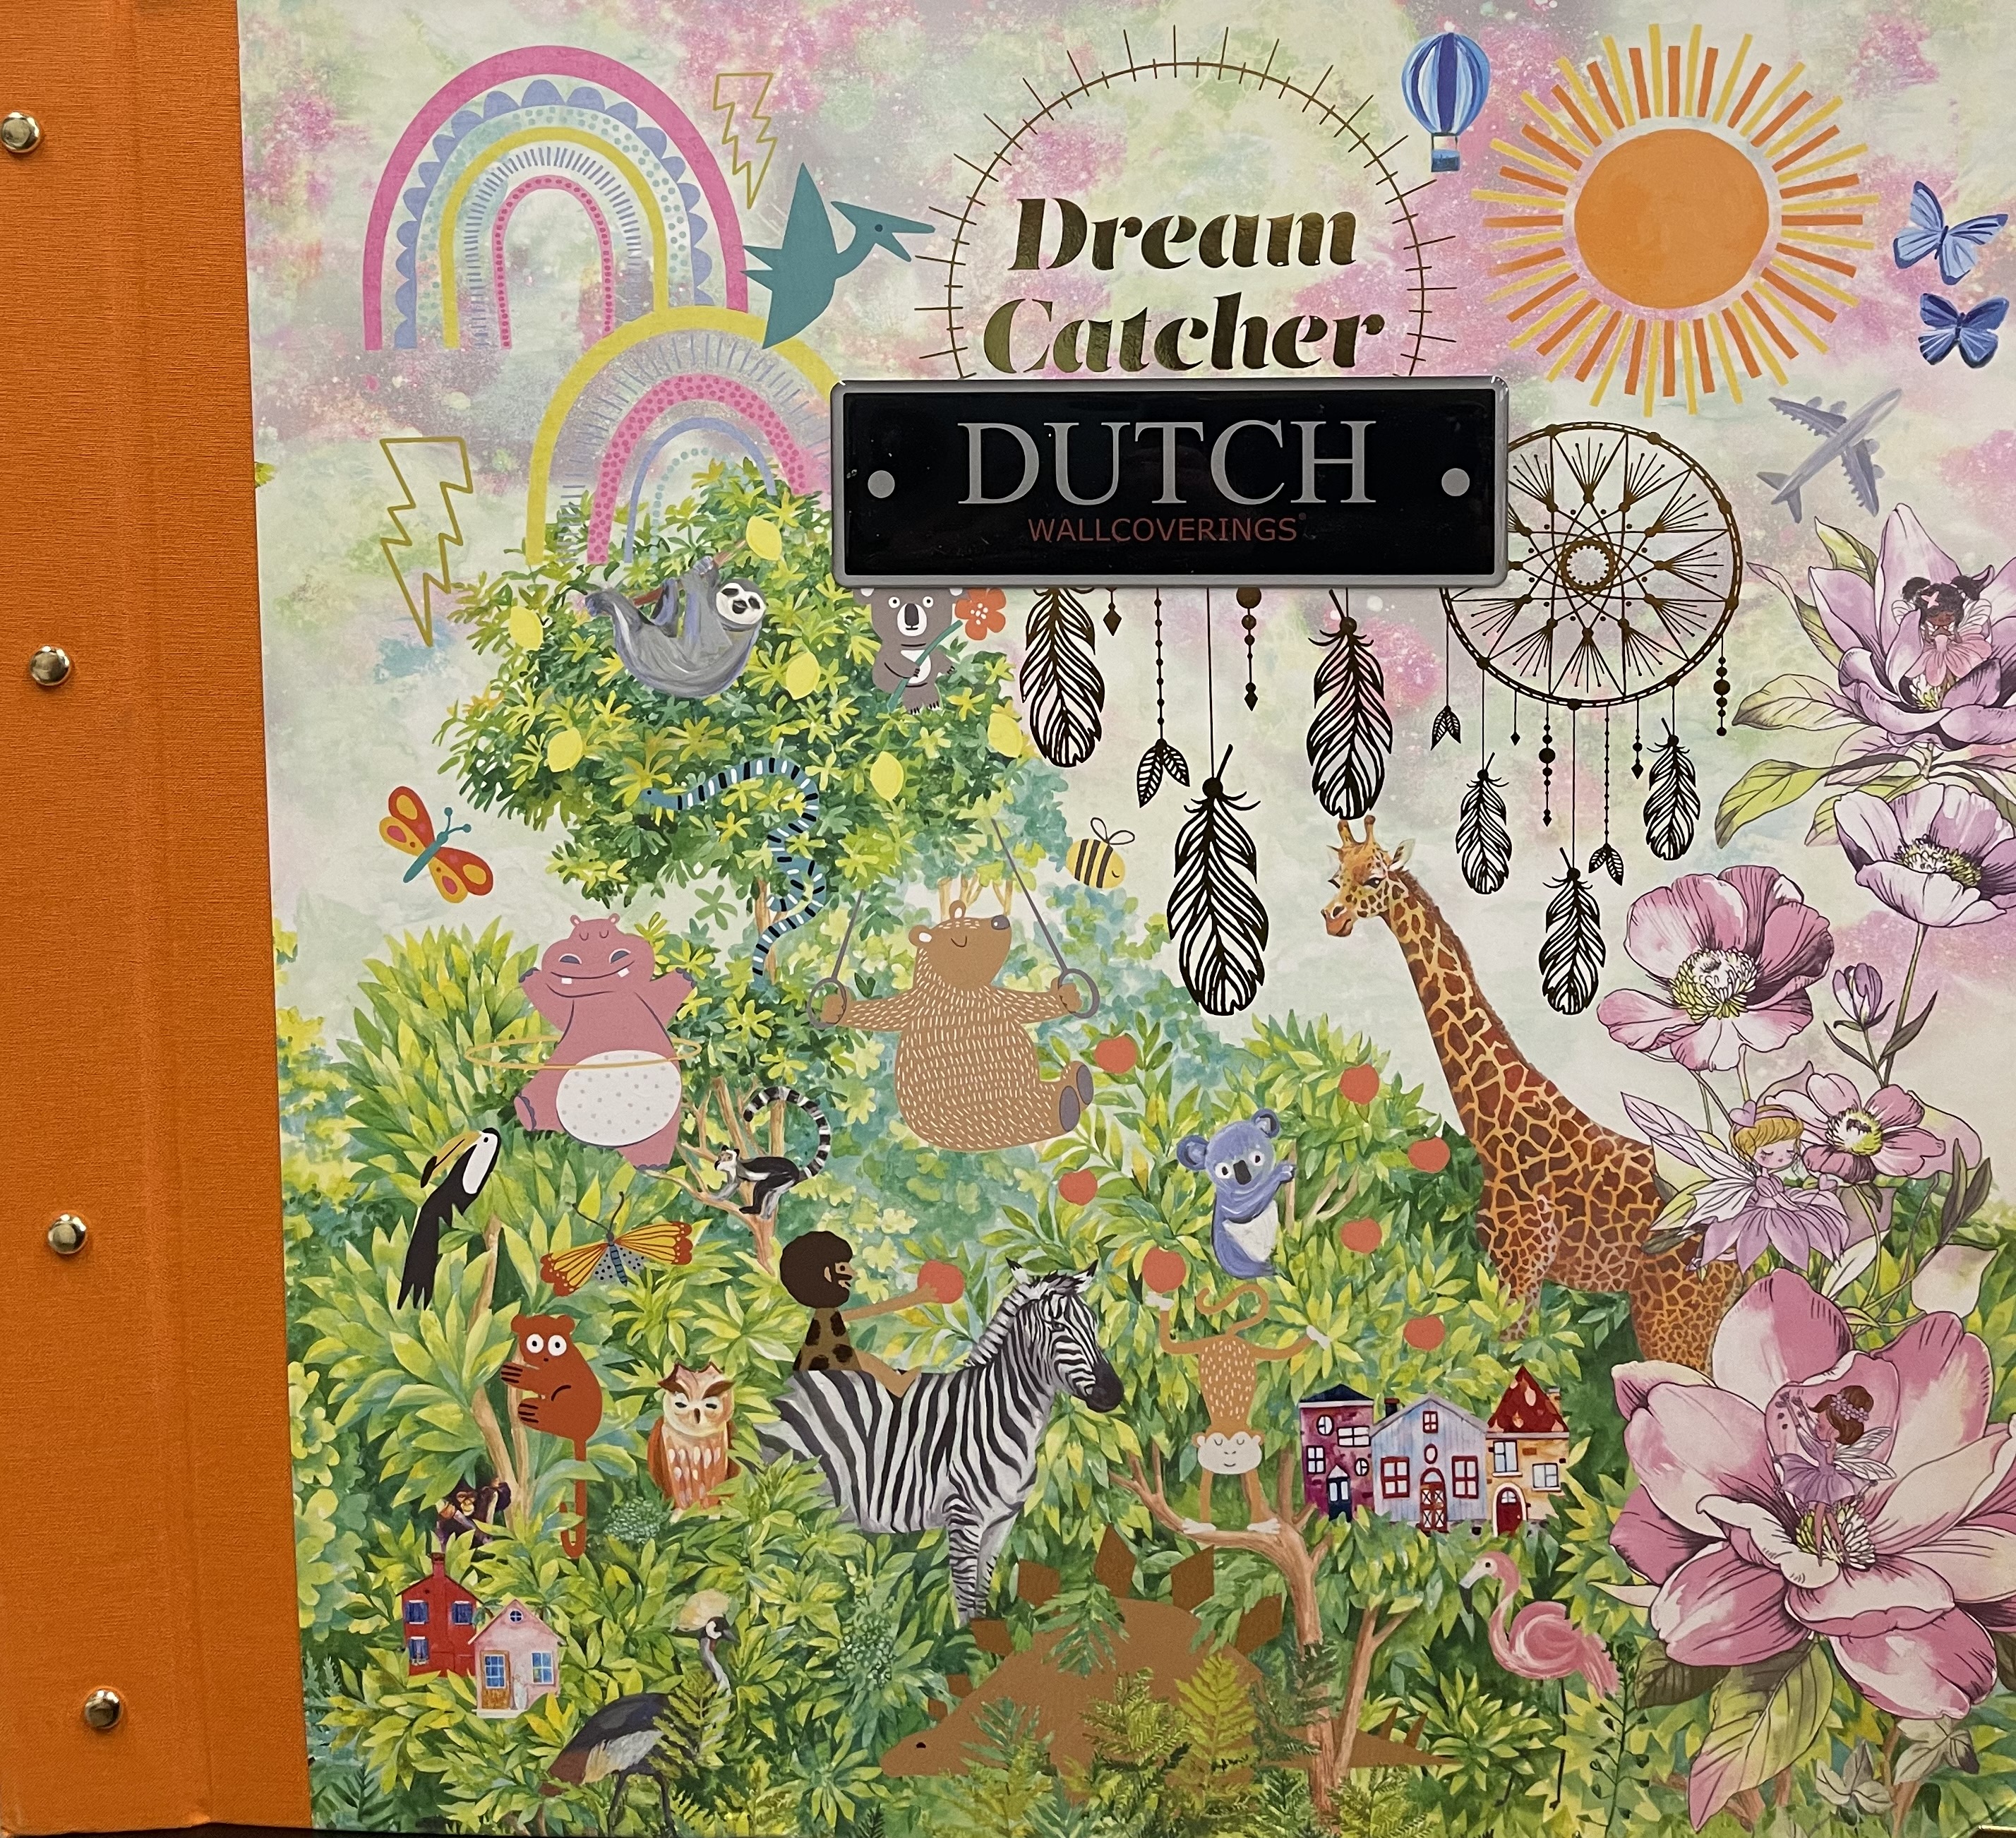 Wallpaper for Kids - Dreamcatcher - Dutch Wallcoverings